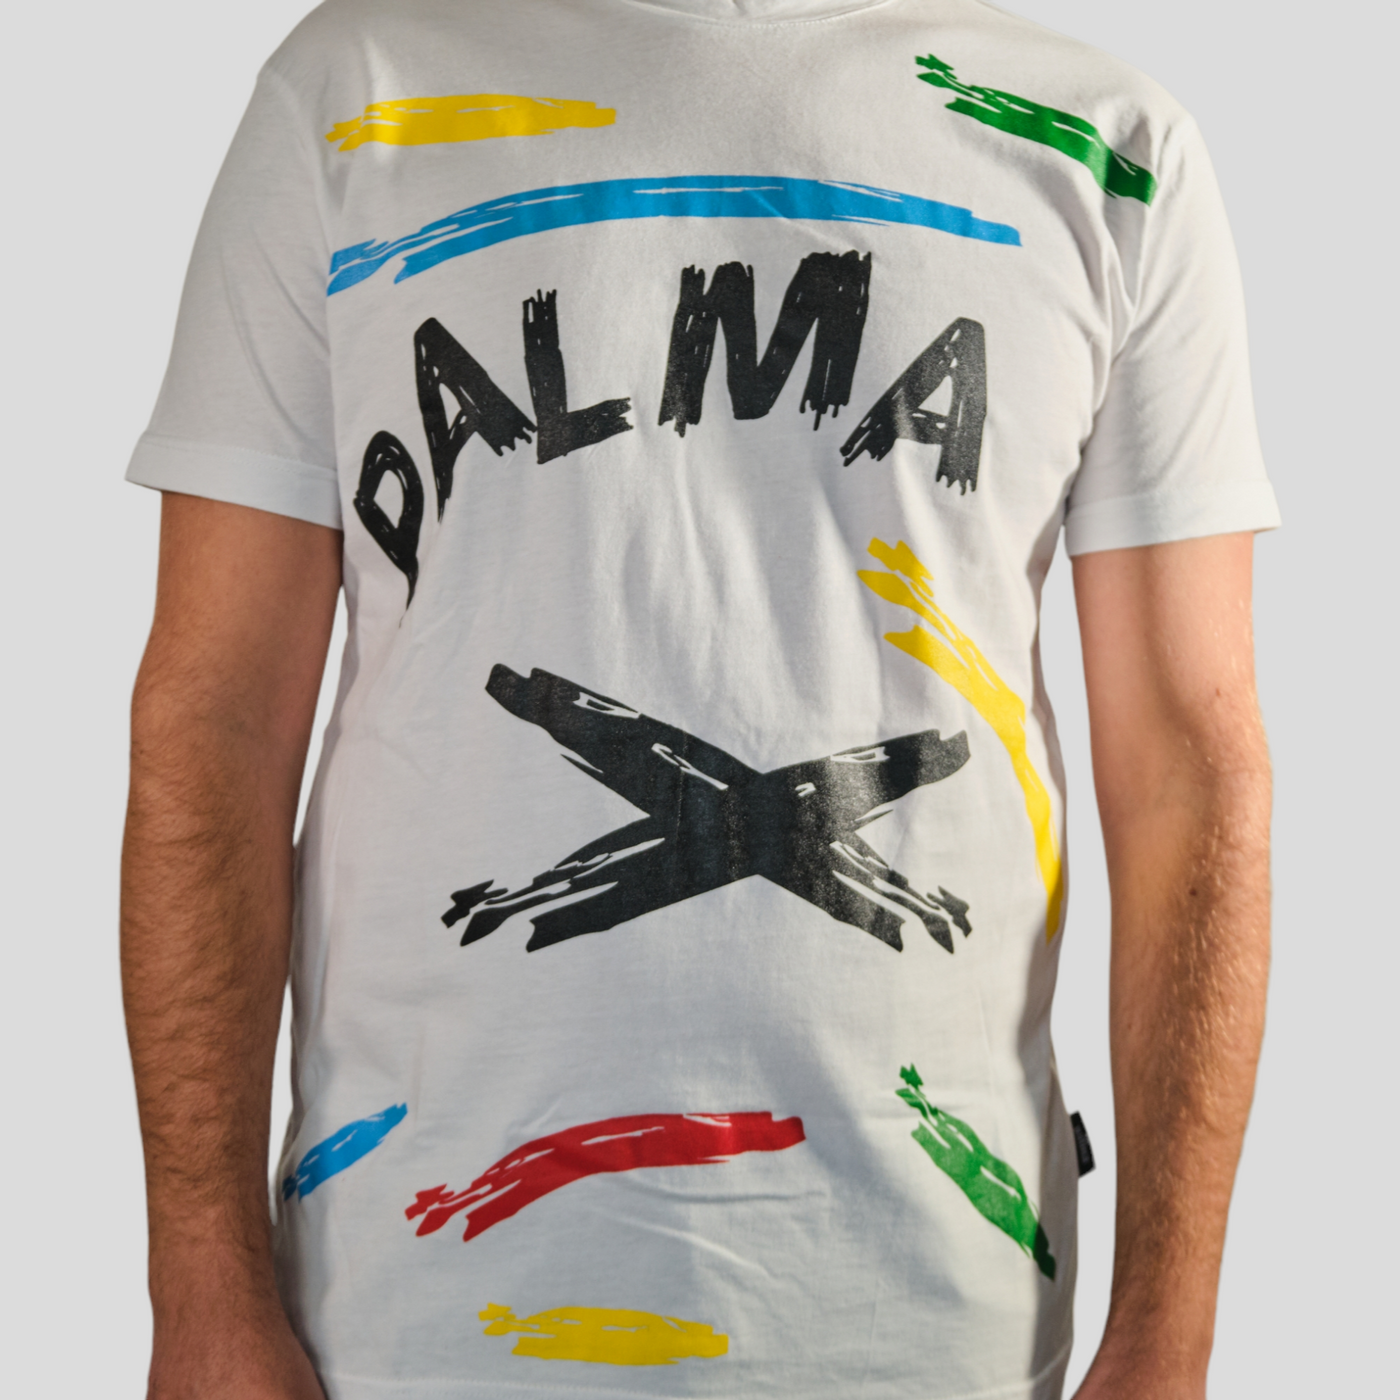 T-Shirt  PALMA